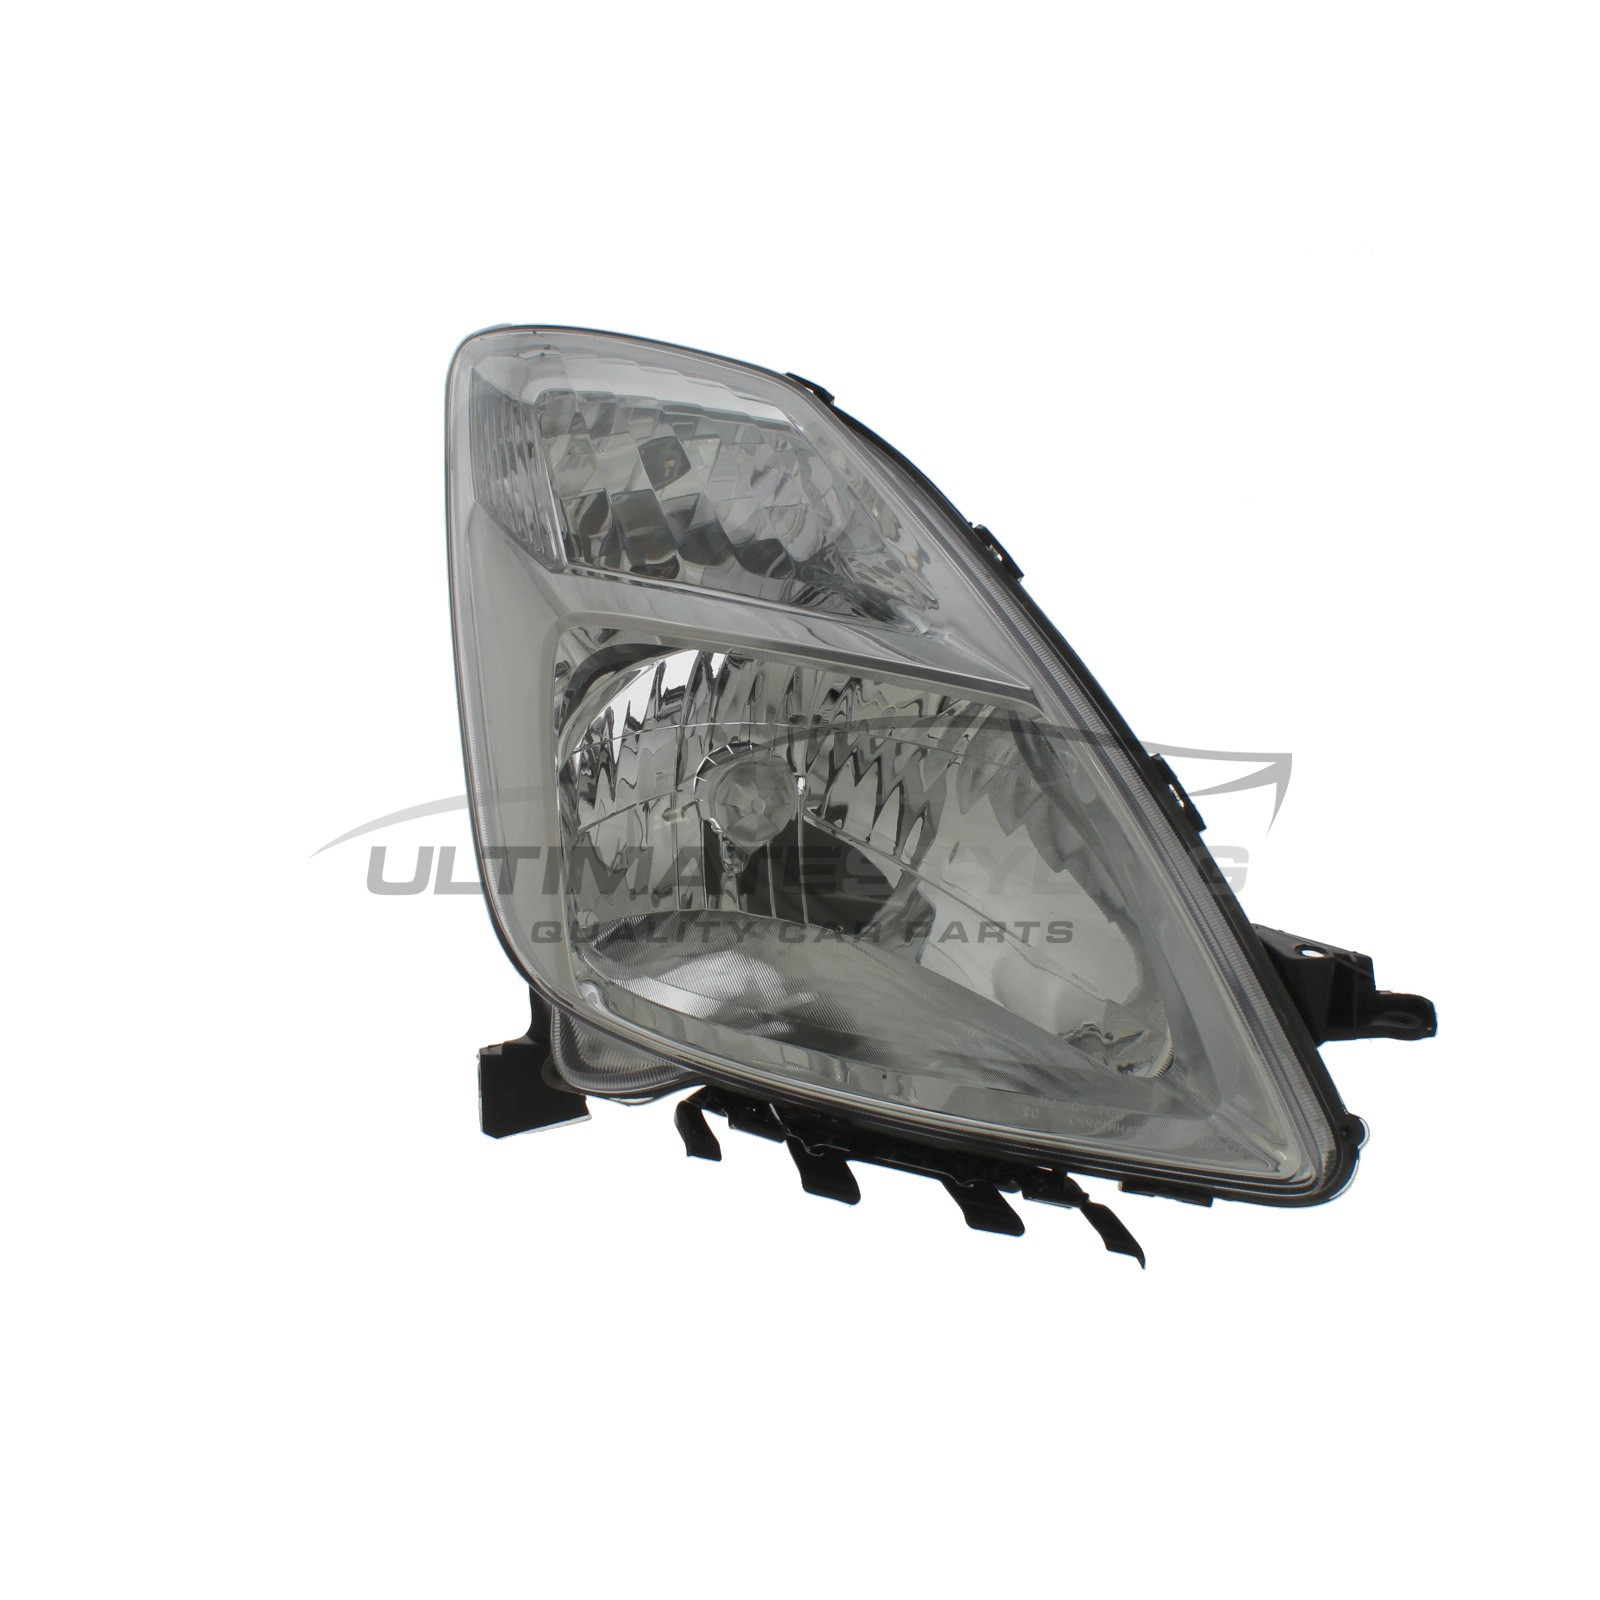 Headlight / Headlamp for Toyota Prius